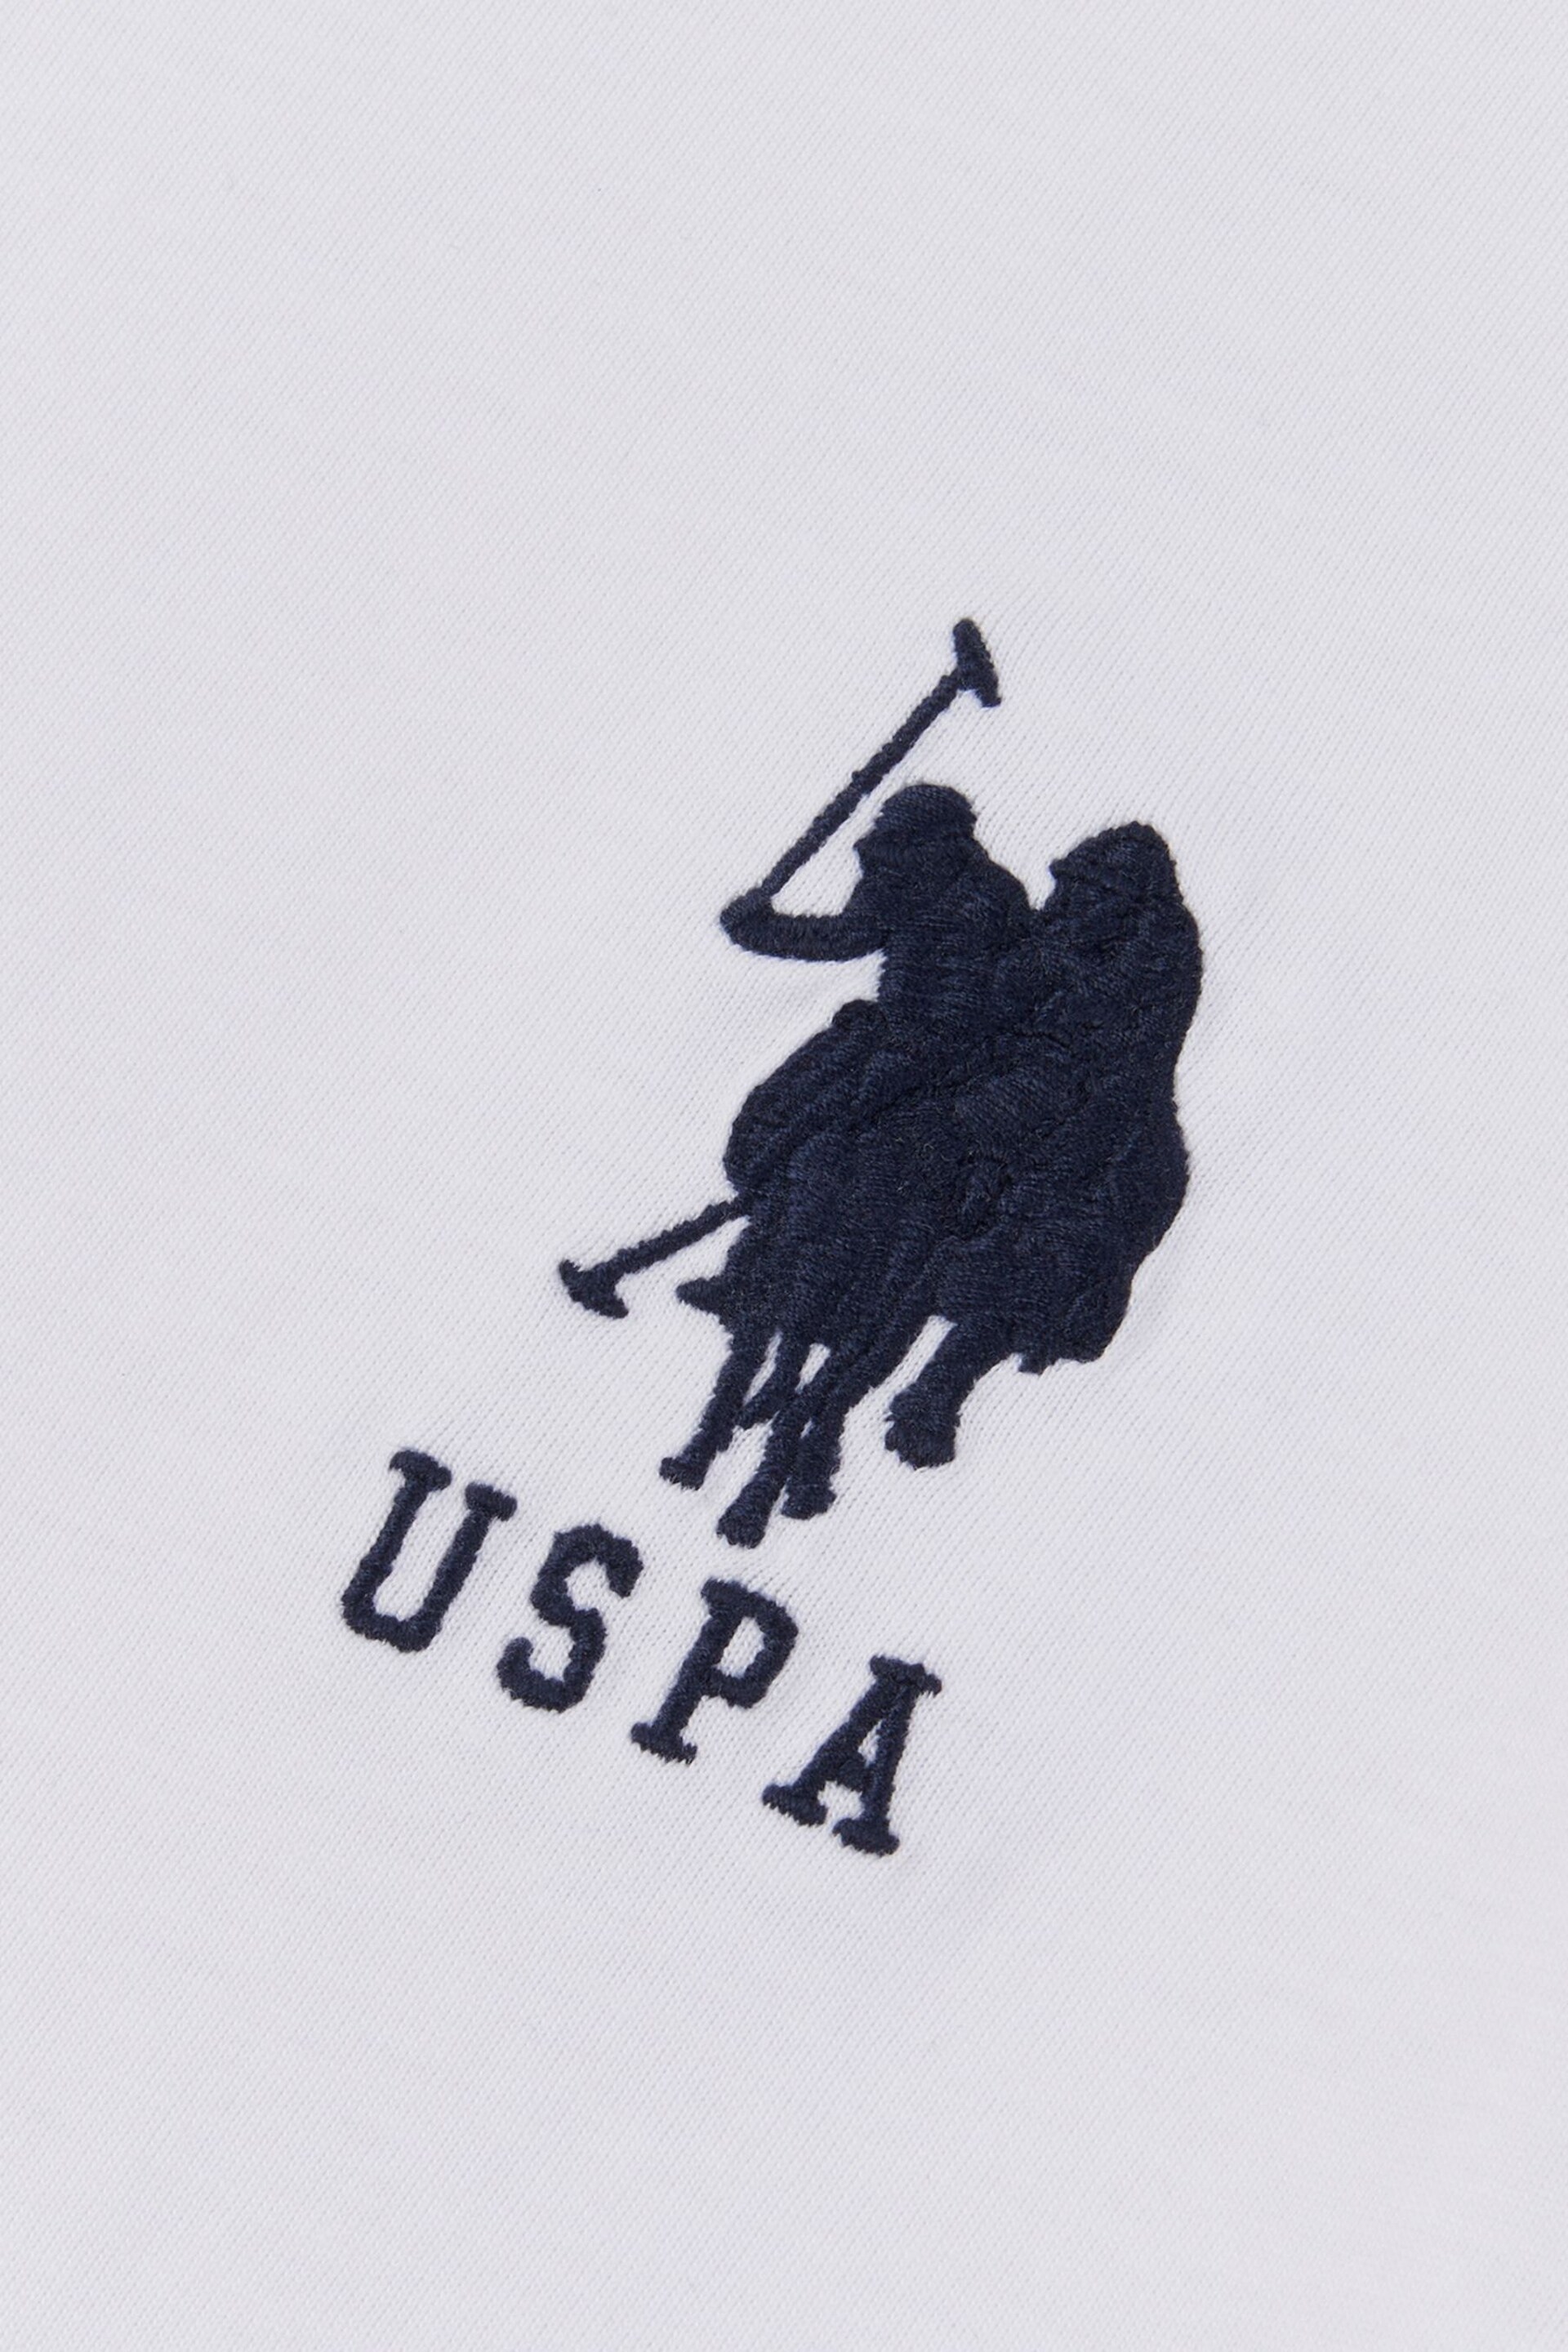 U.S. Polo Assn. Boys Player 3 T-Shirt - Image 7 of 7